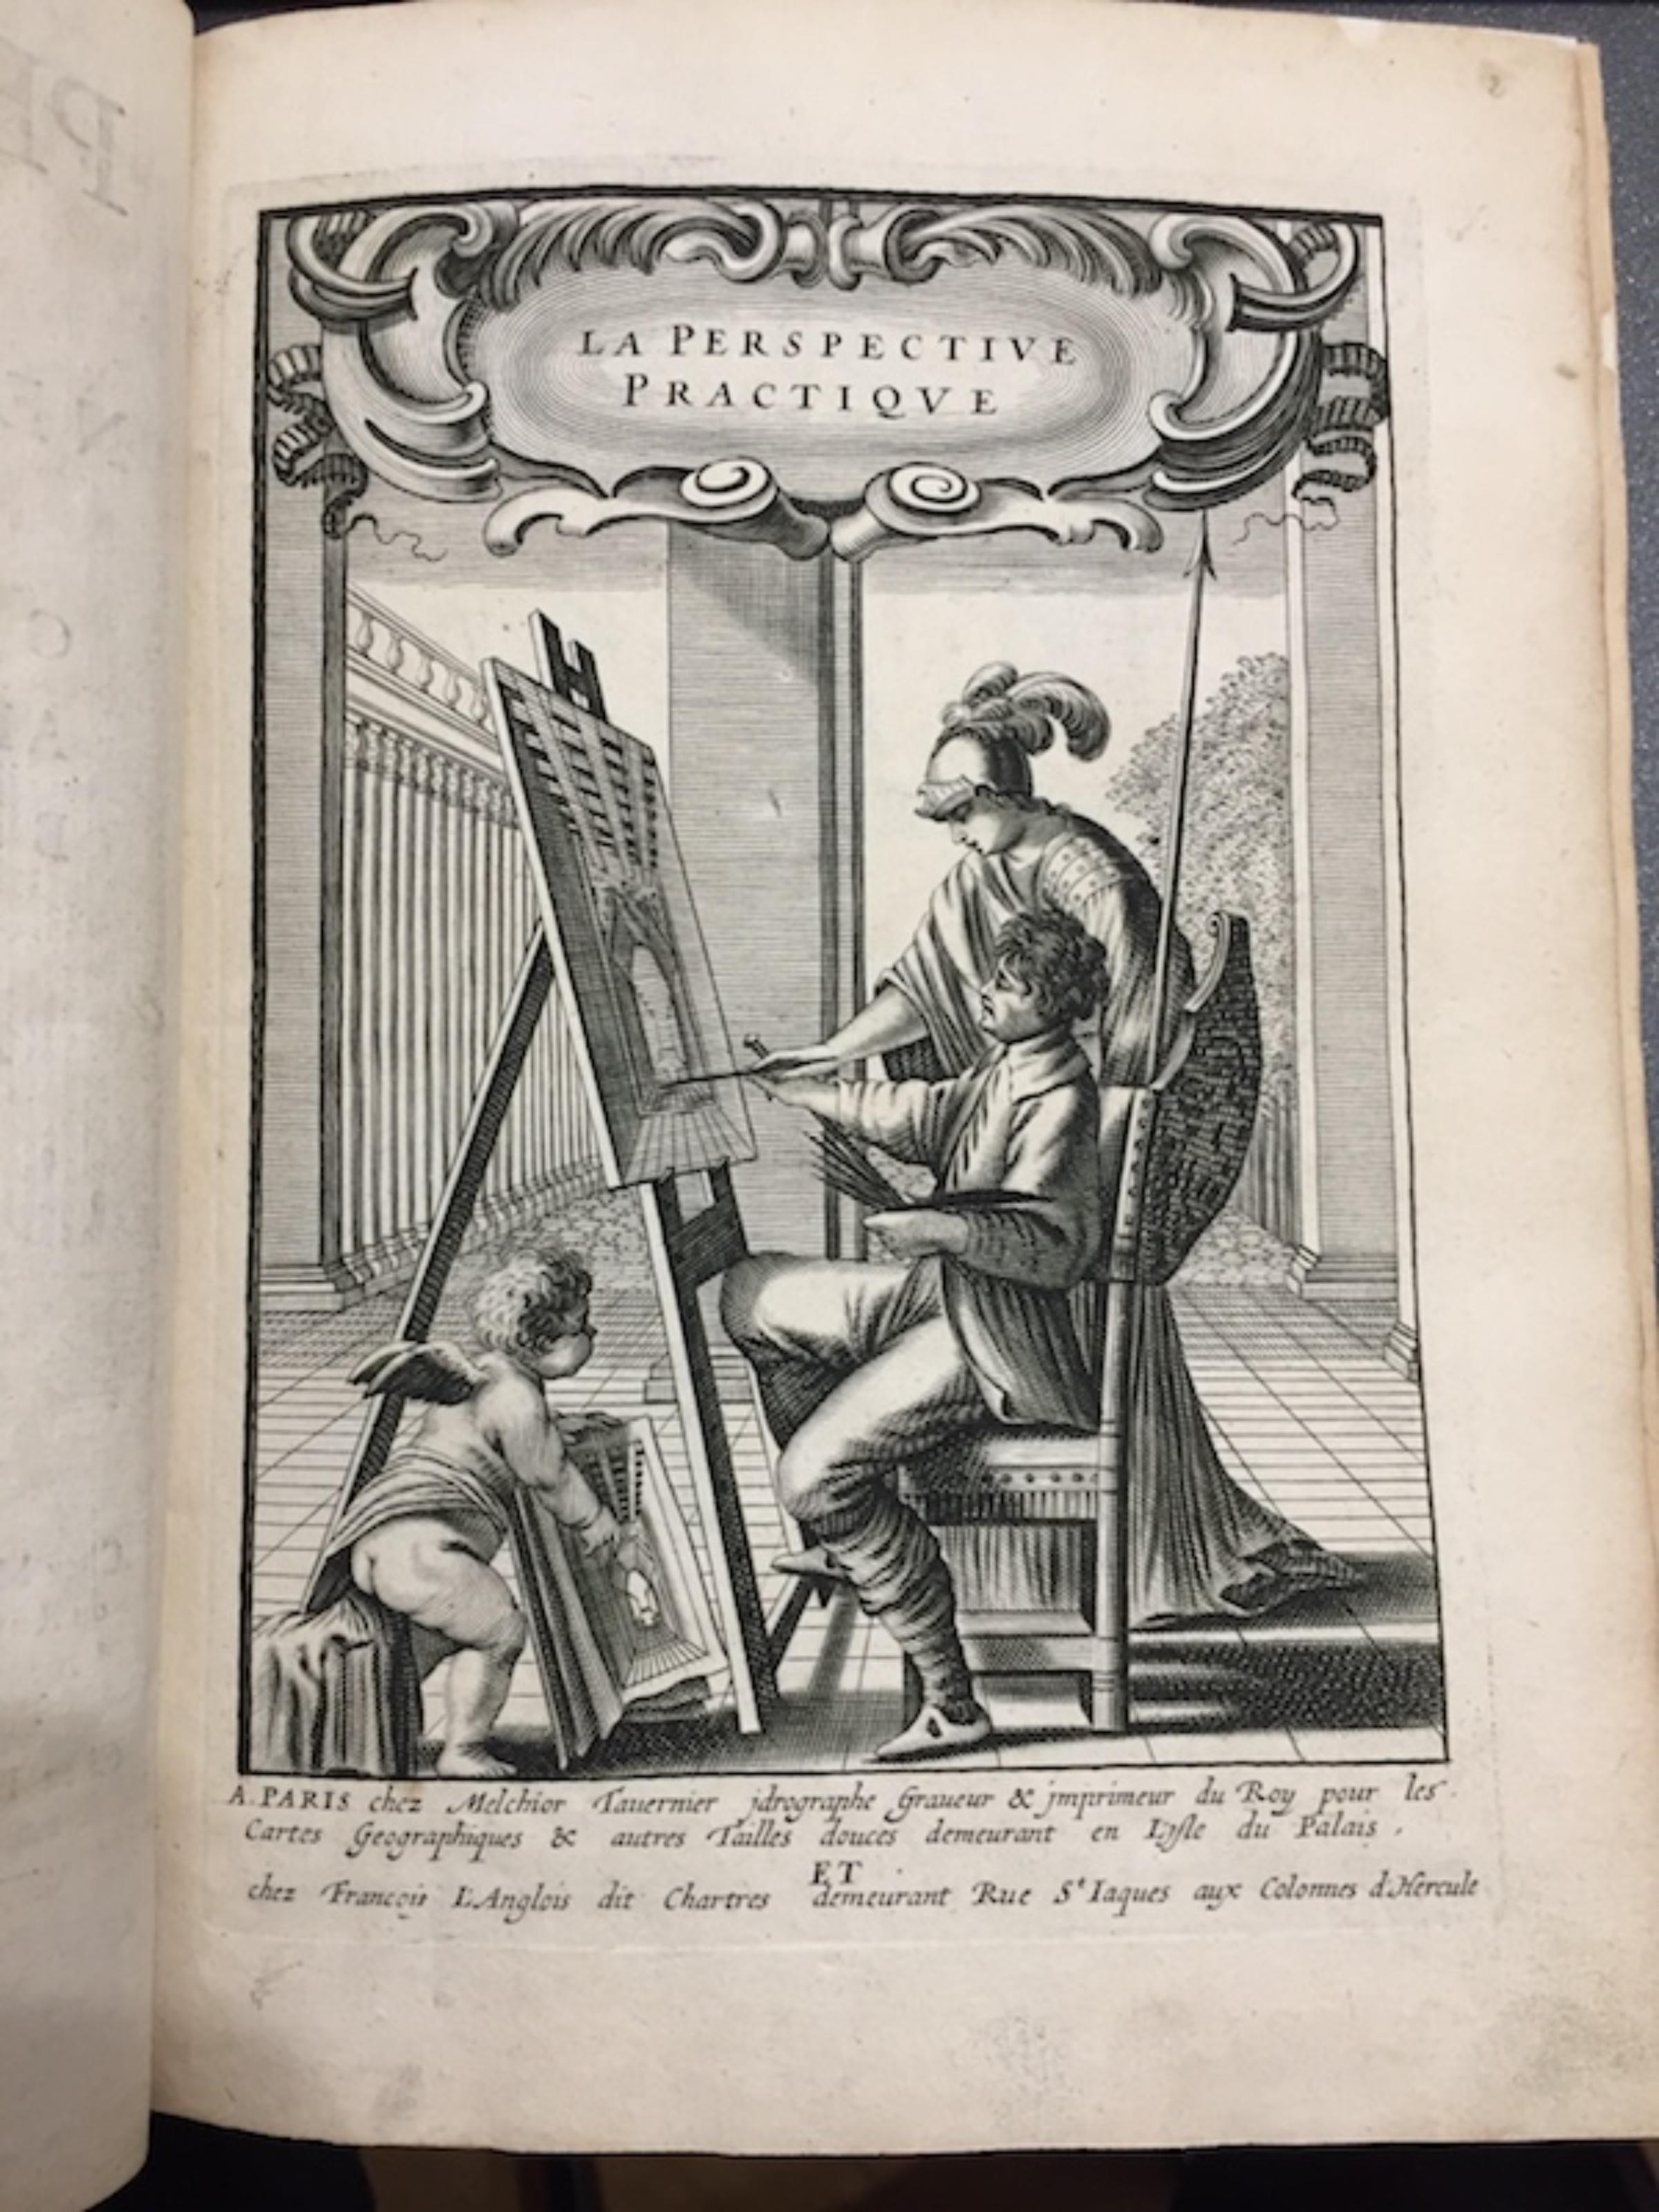 La Perspective Pratique - Rare Ancient Illustrated Book by Jean Dubrenil - 1642